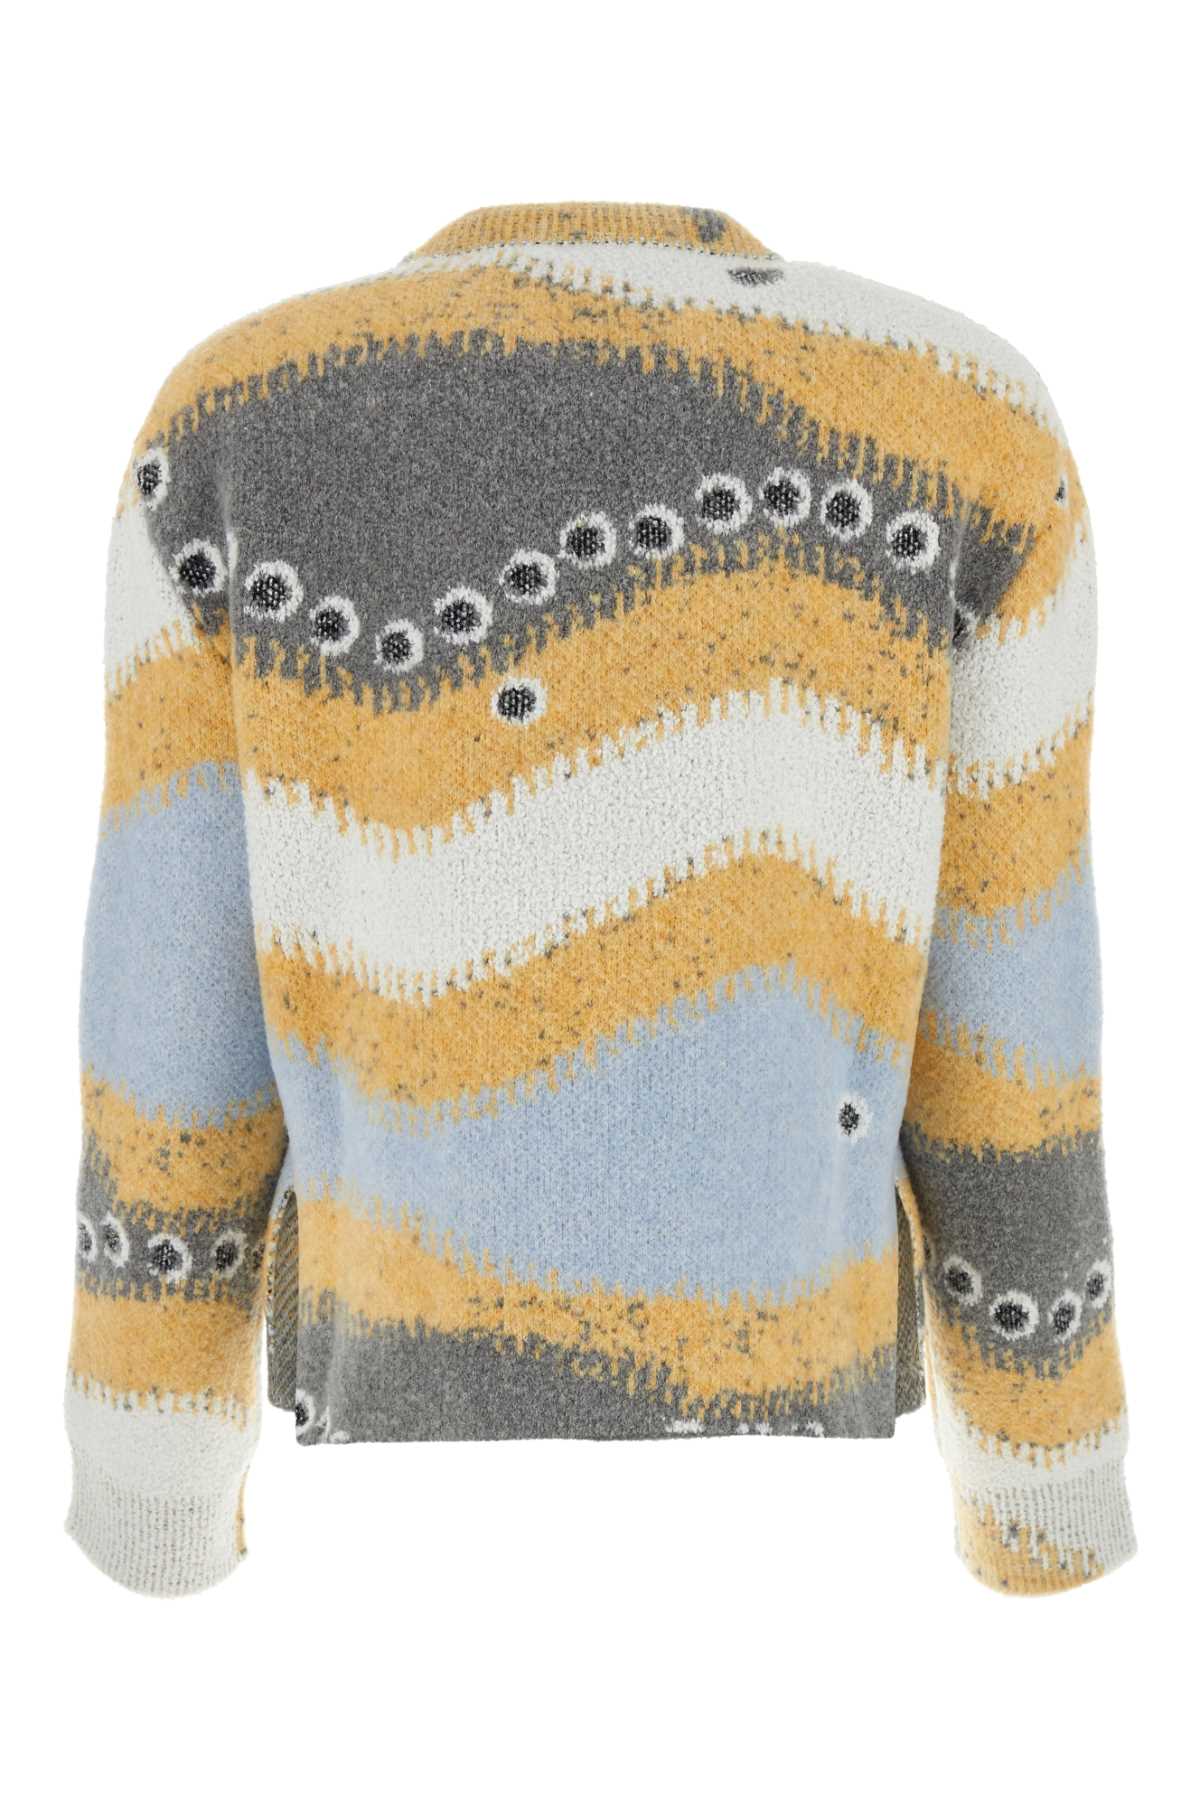 Loewe Multicolor Stretch Wool Blend Sweater